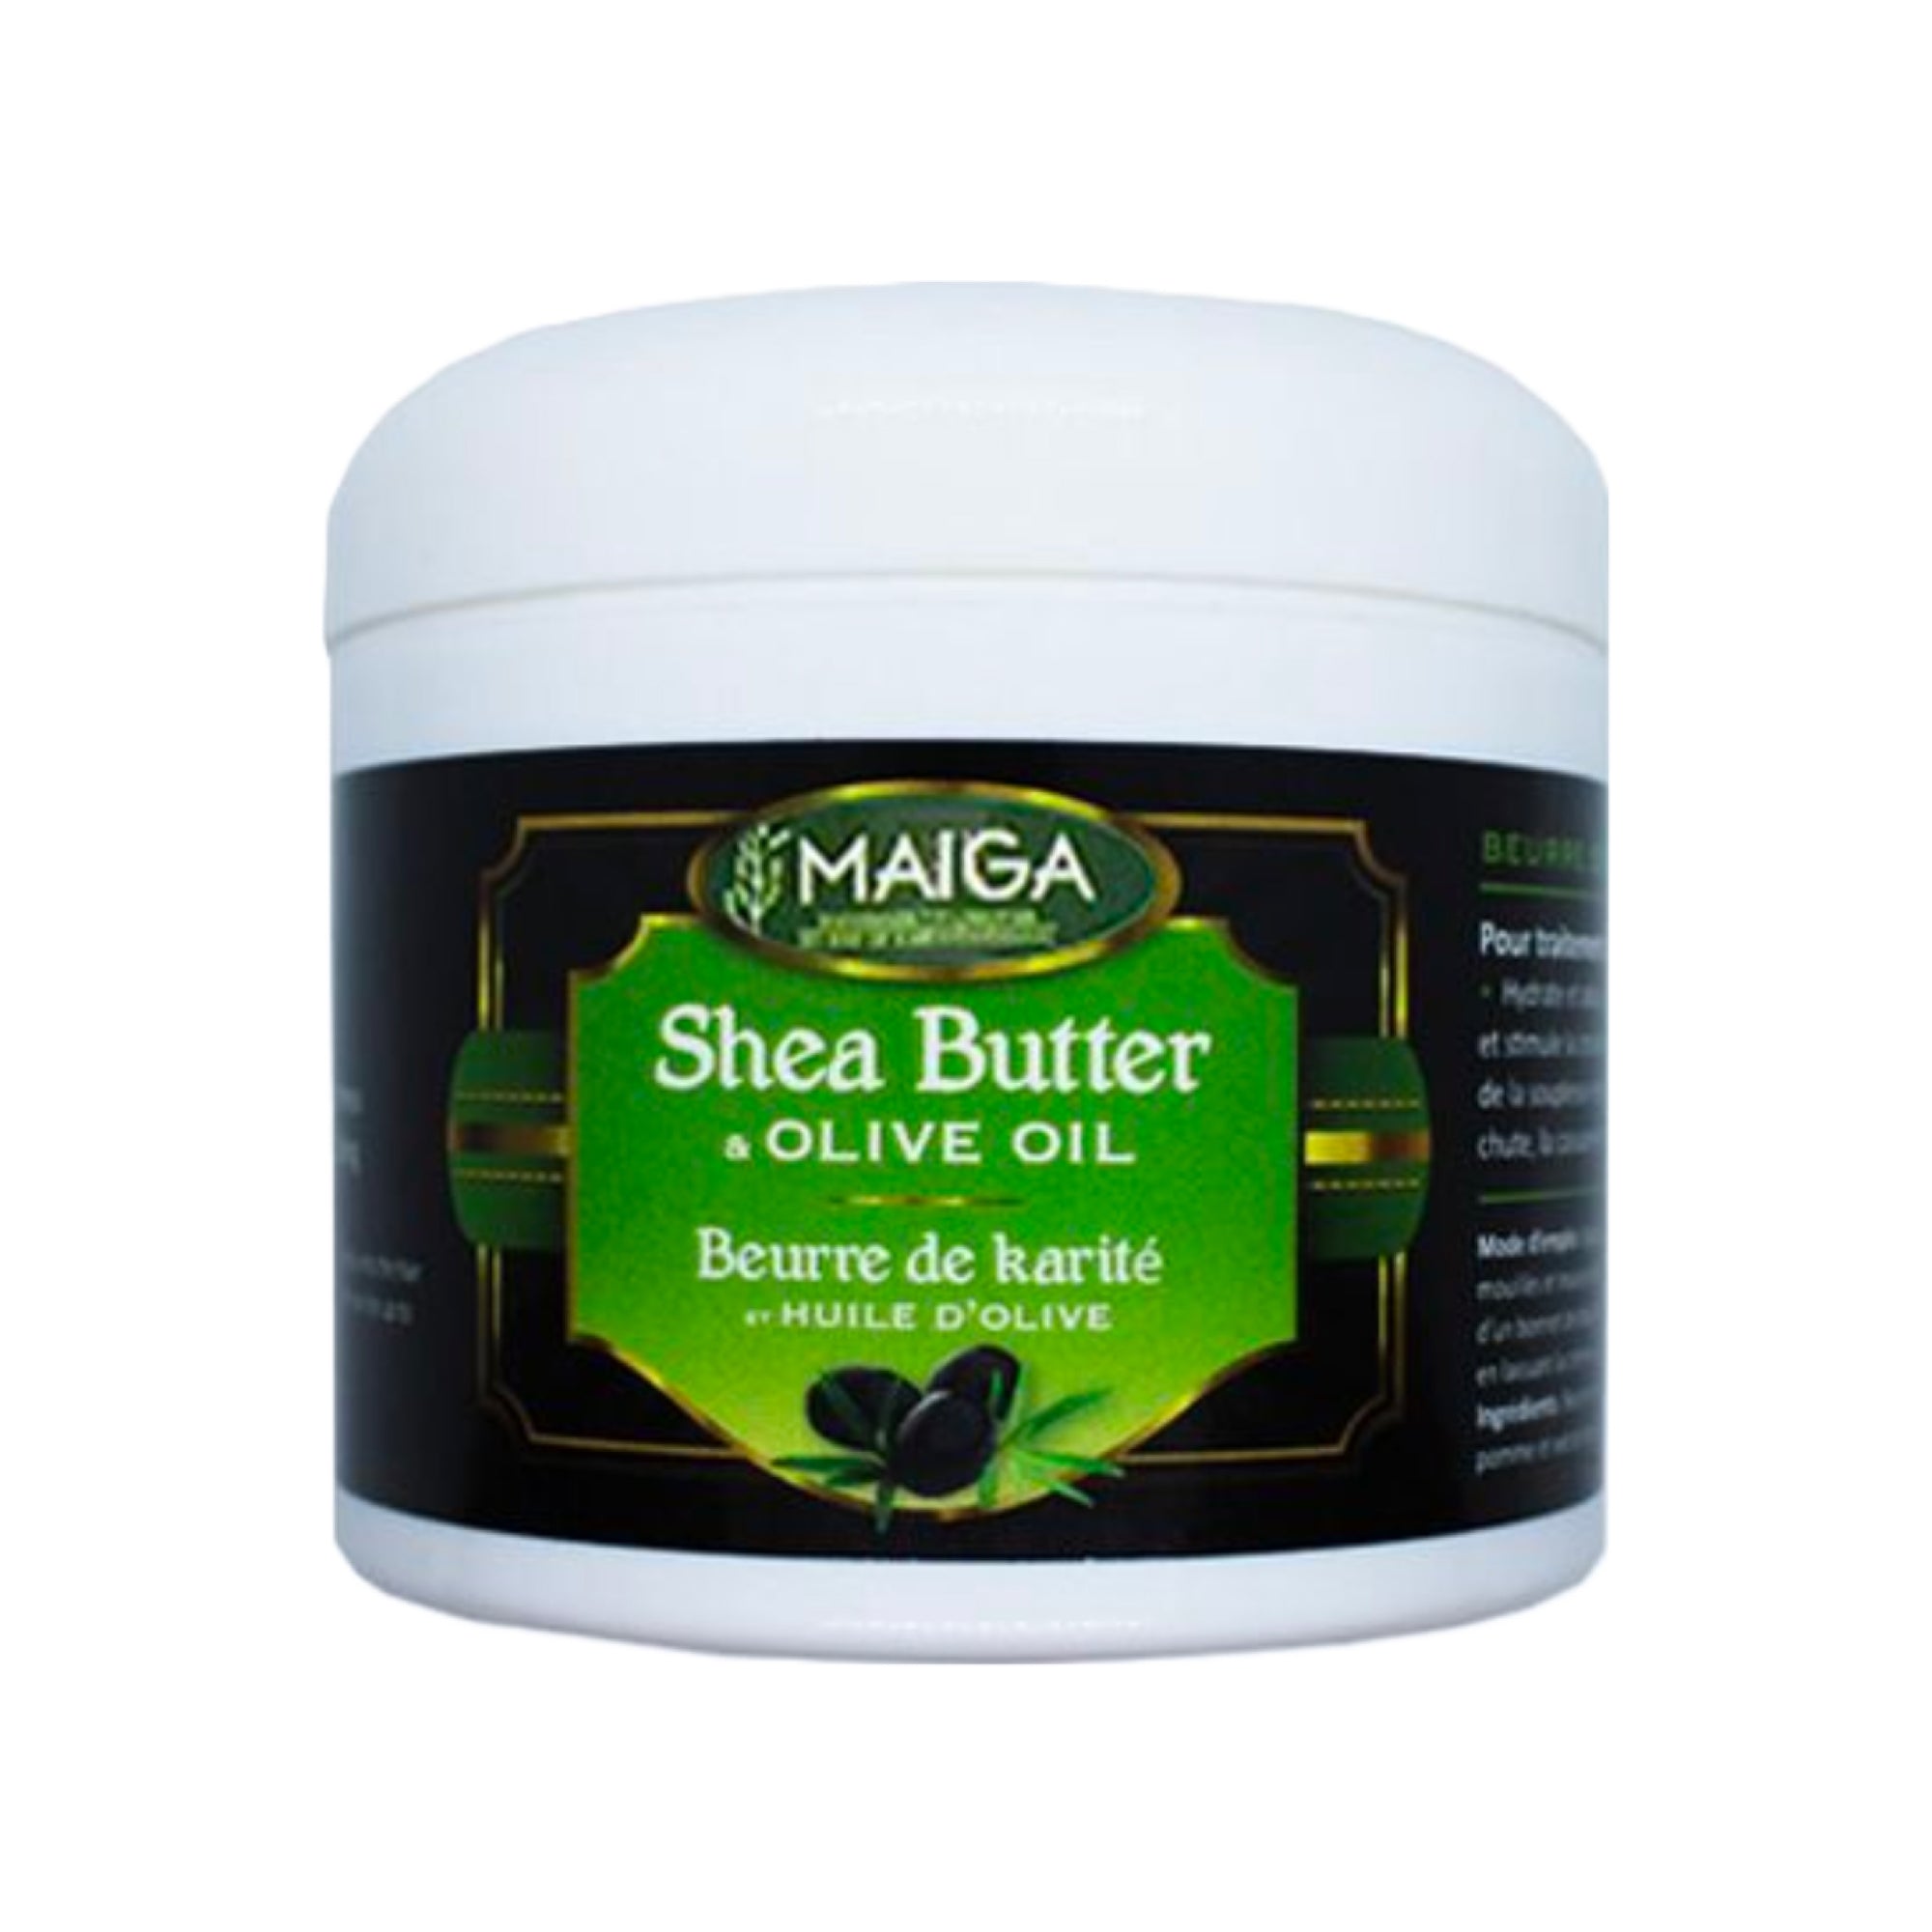 Maiga Shea Butter & Olive Oil 30ml